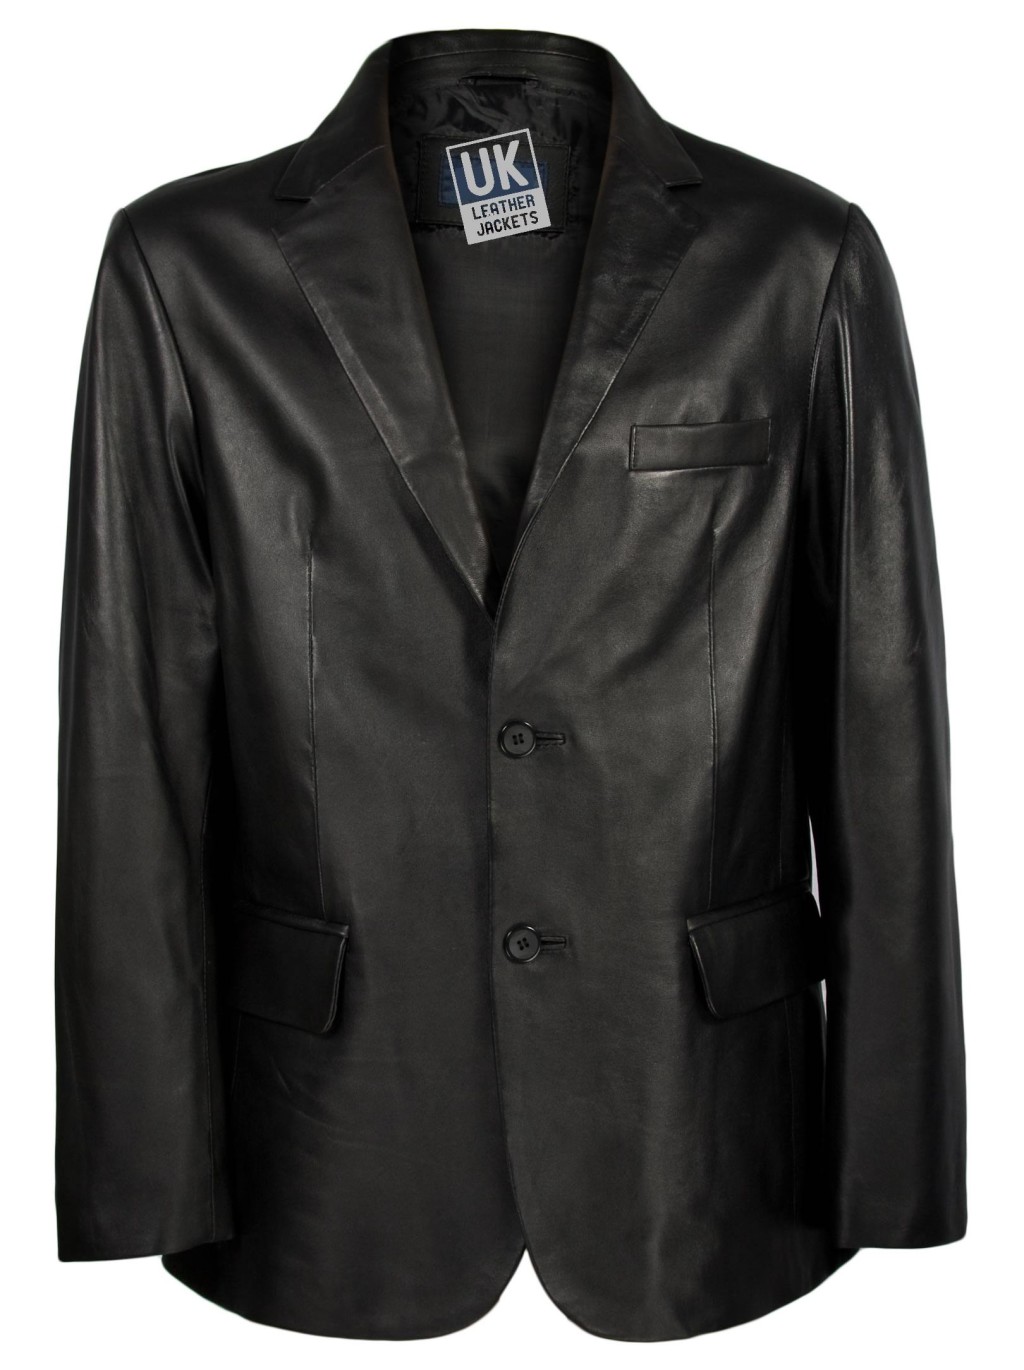 Mens Leather Blazer and Reefer Jackets | UK Leather Jackets